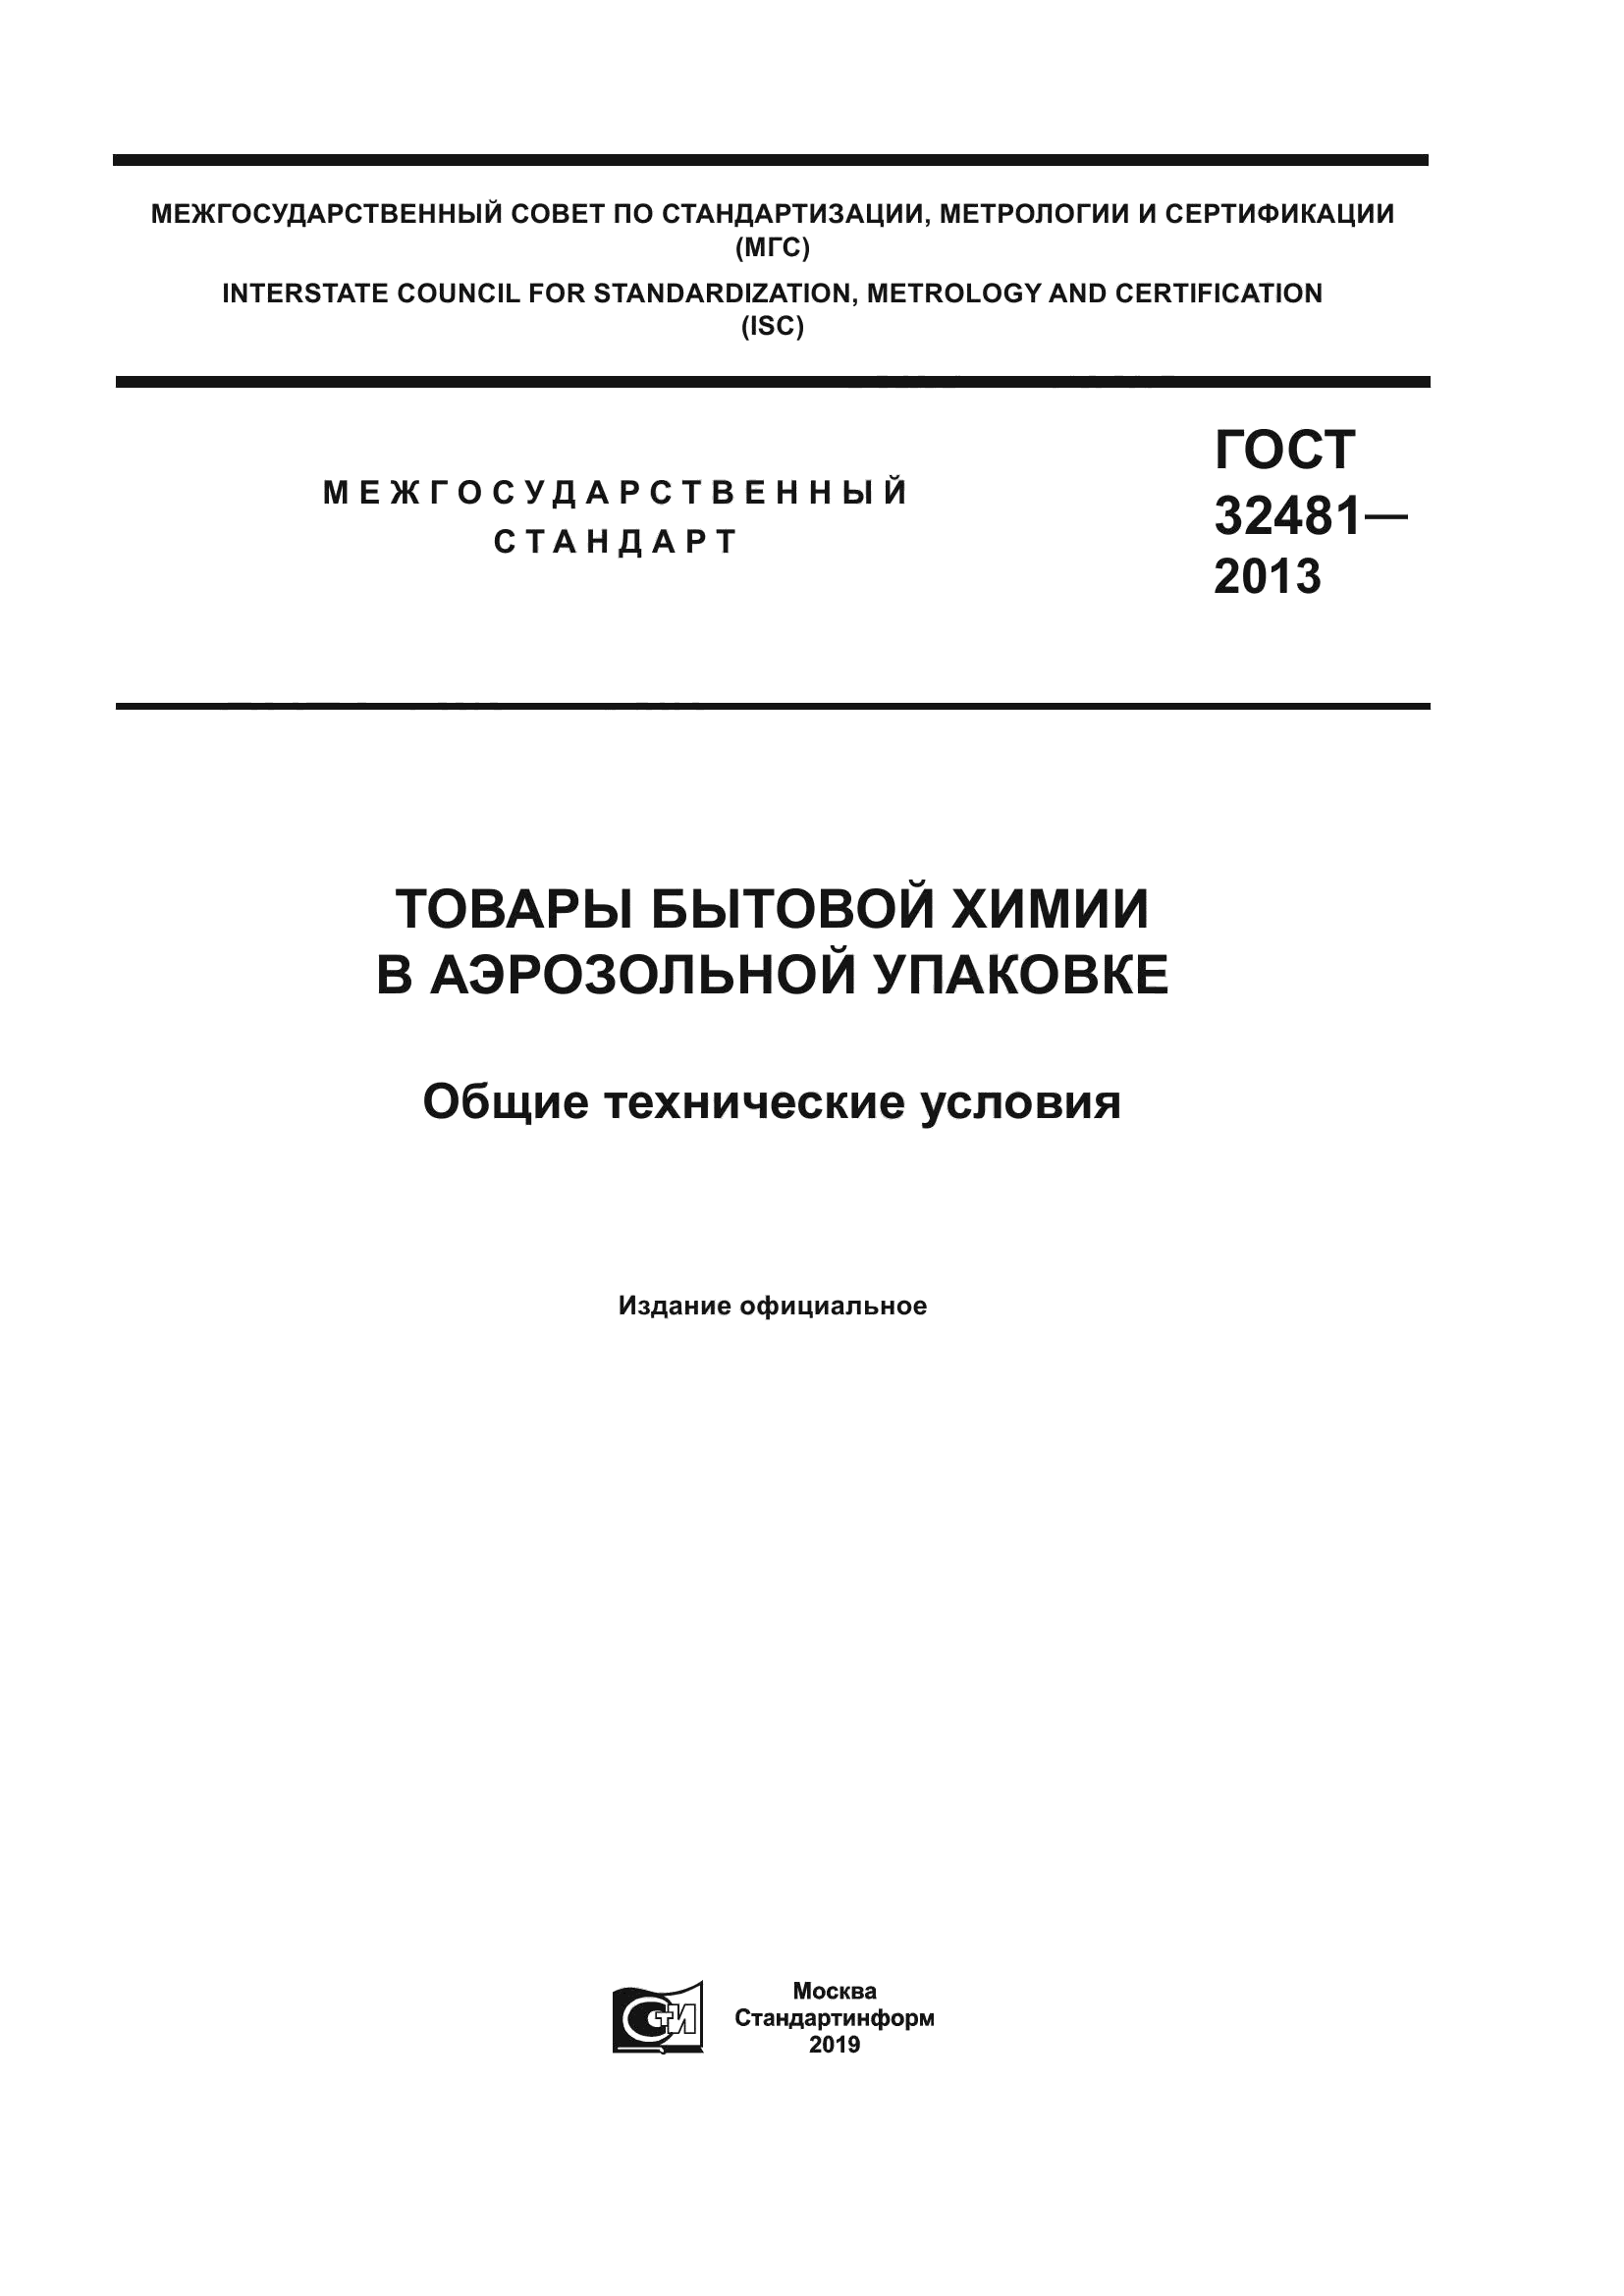 ГОСТ 32481-2013